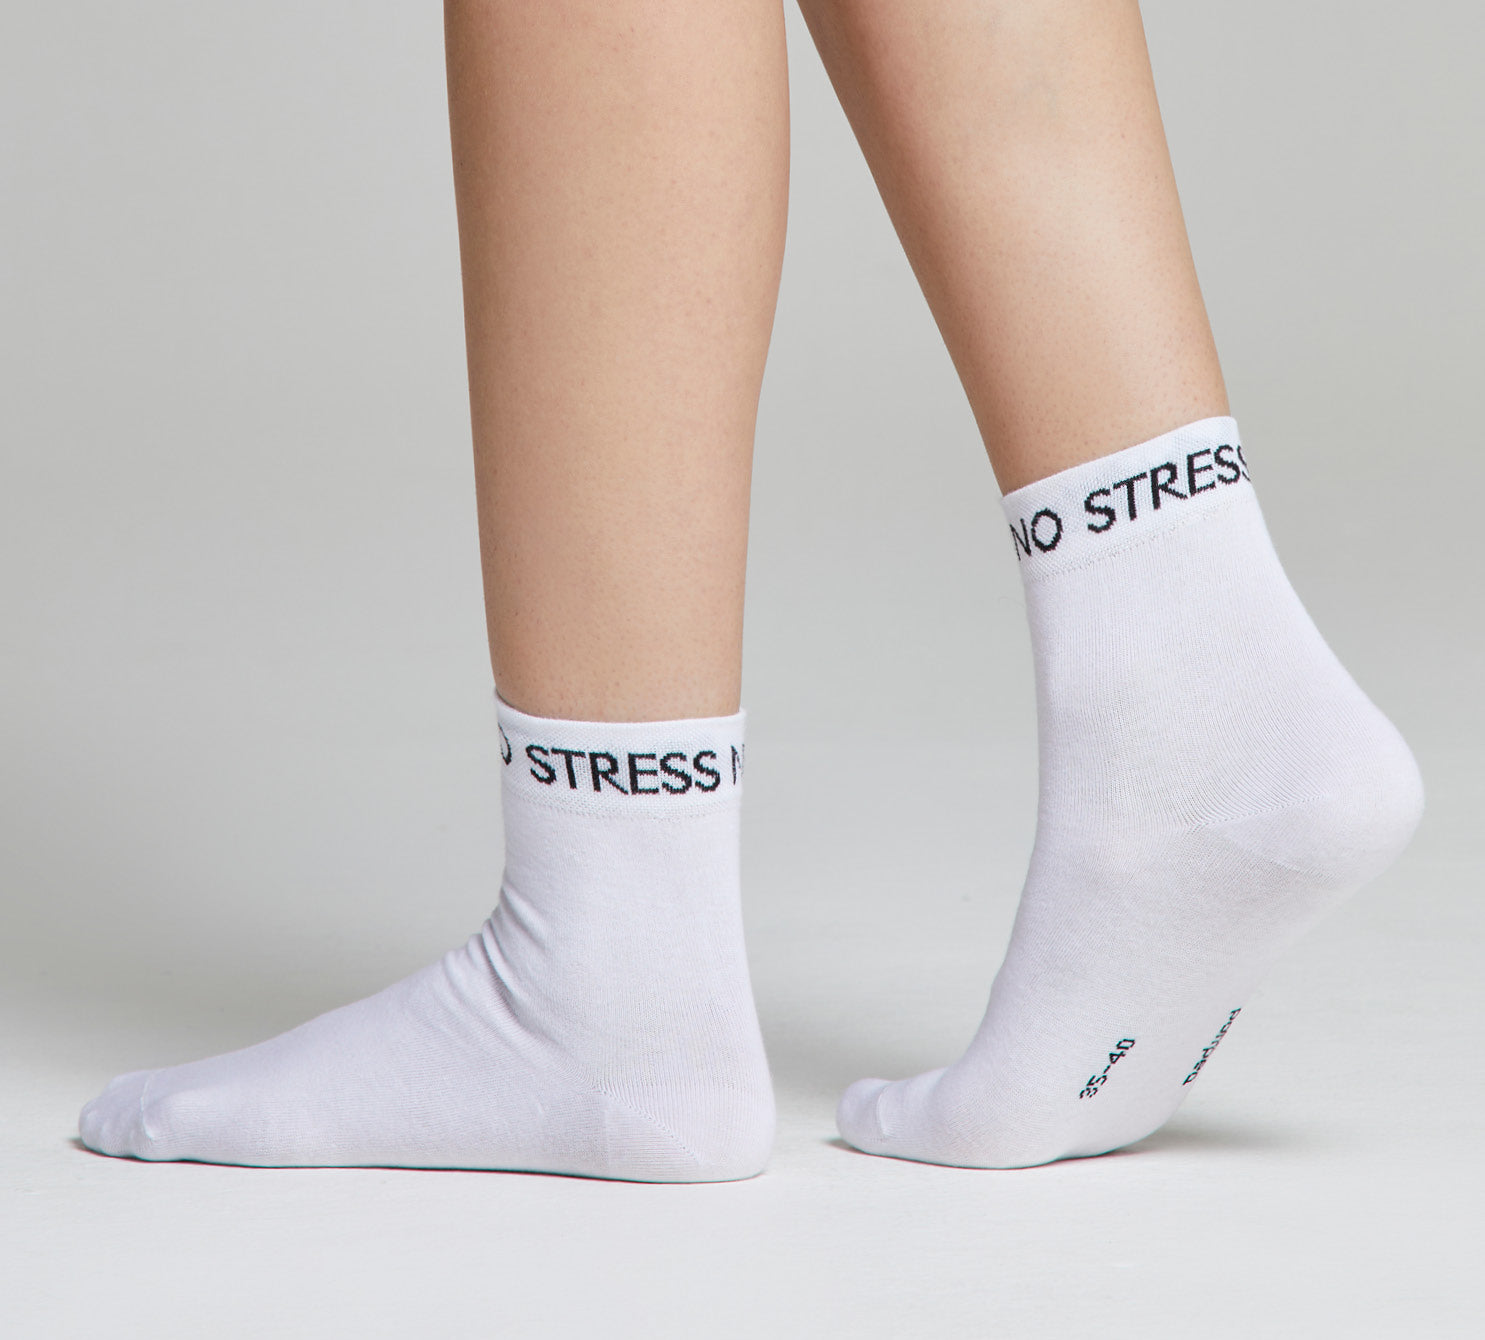 No Stress unisex short socks